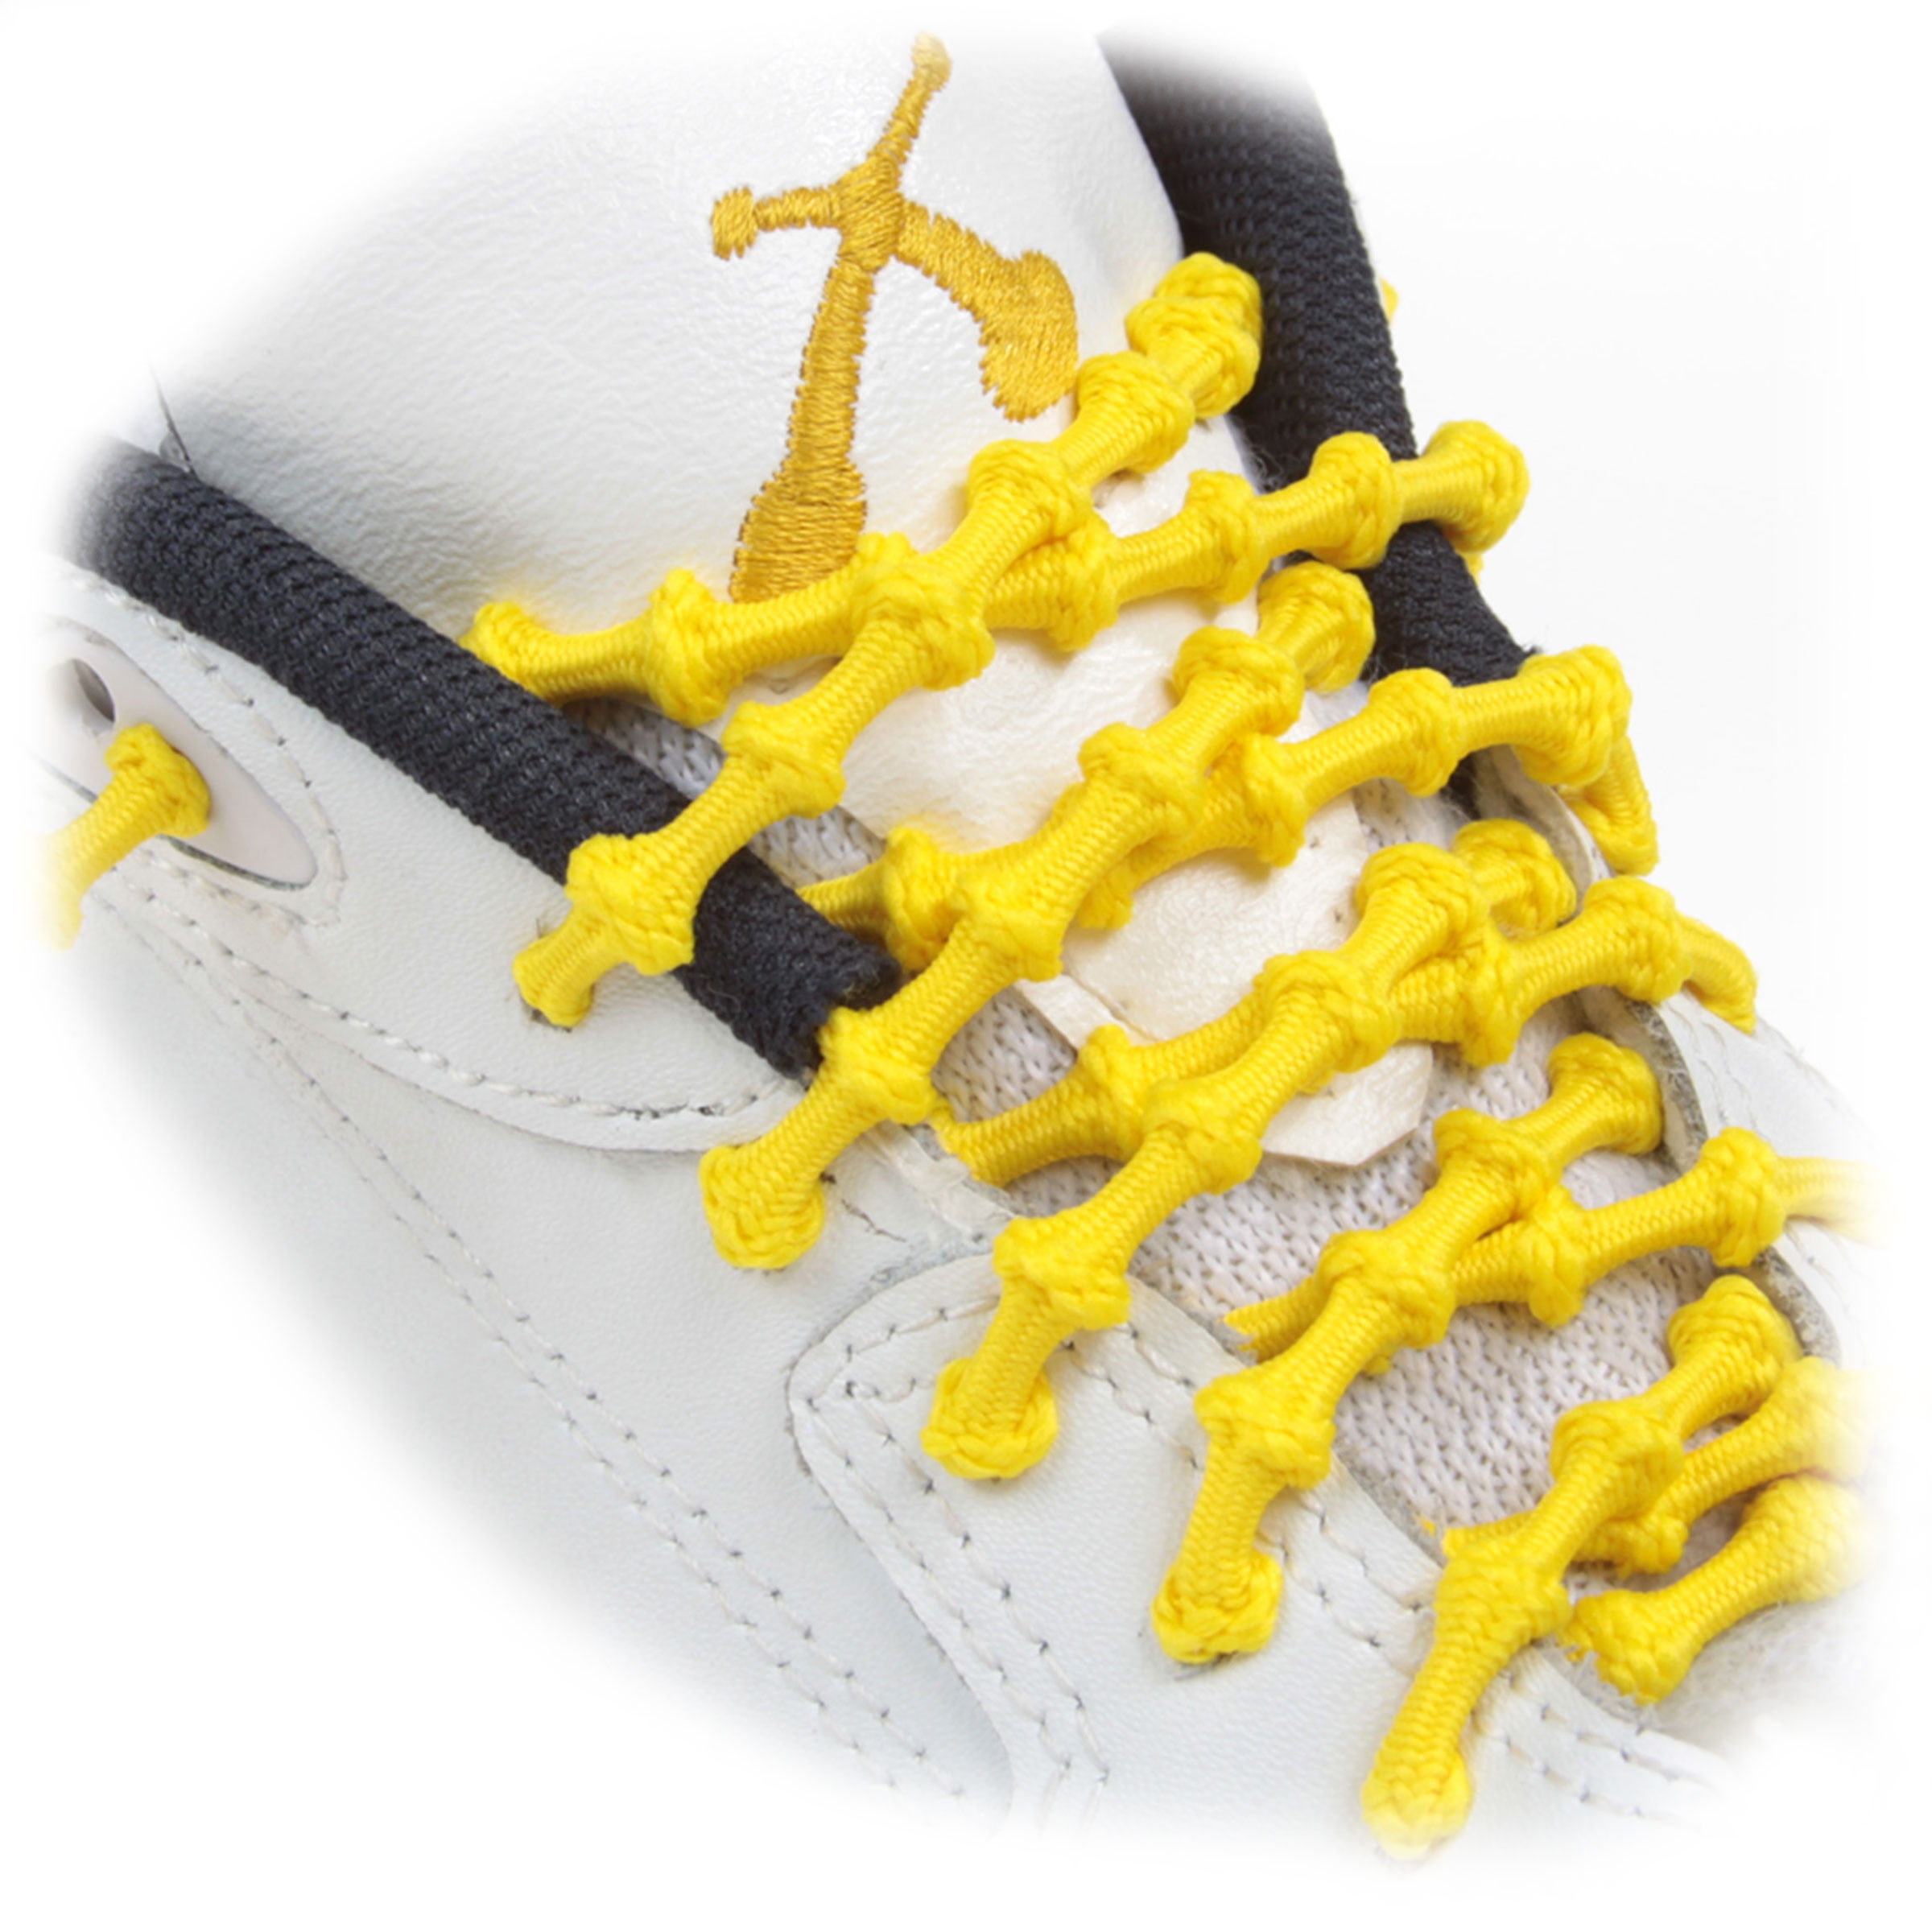 Спортивная шнуровка. Асикс шнурки Xtenex. Шнурки Hi-Tec Performance Laces. Желтые шнурки. Шнурки с пупырышками.